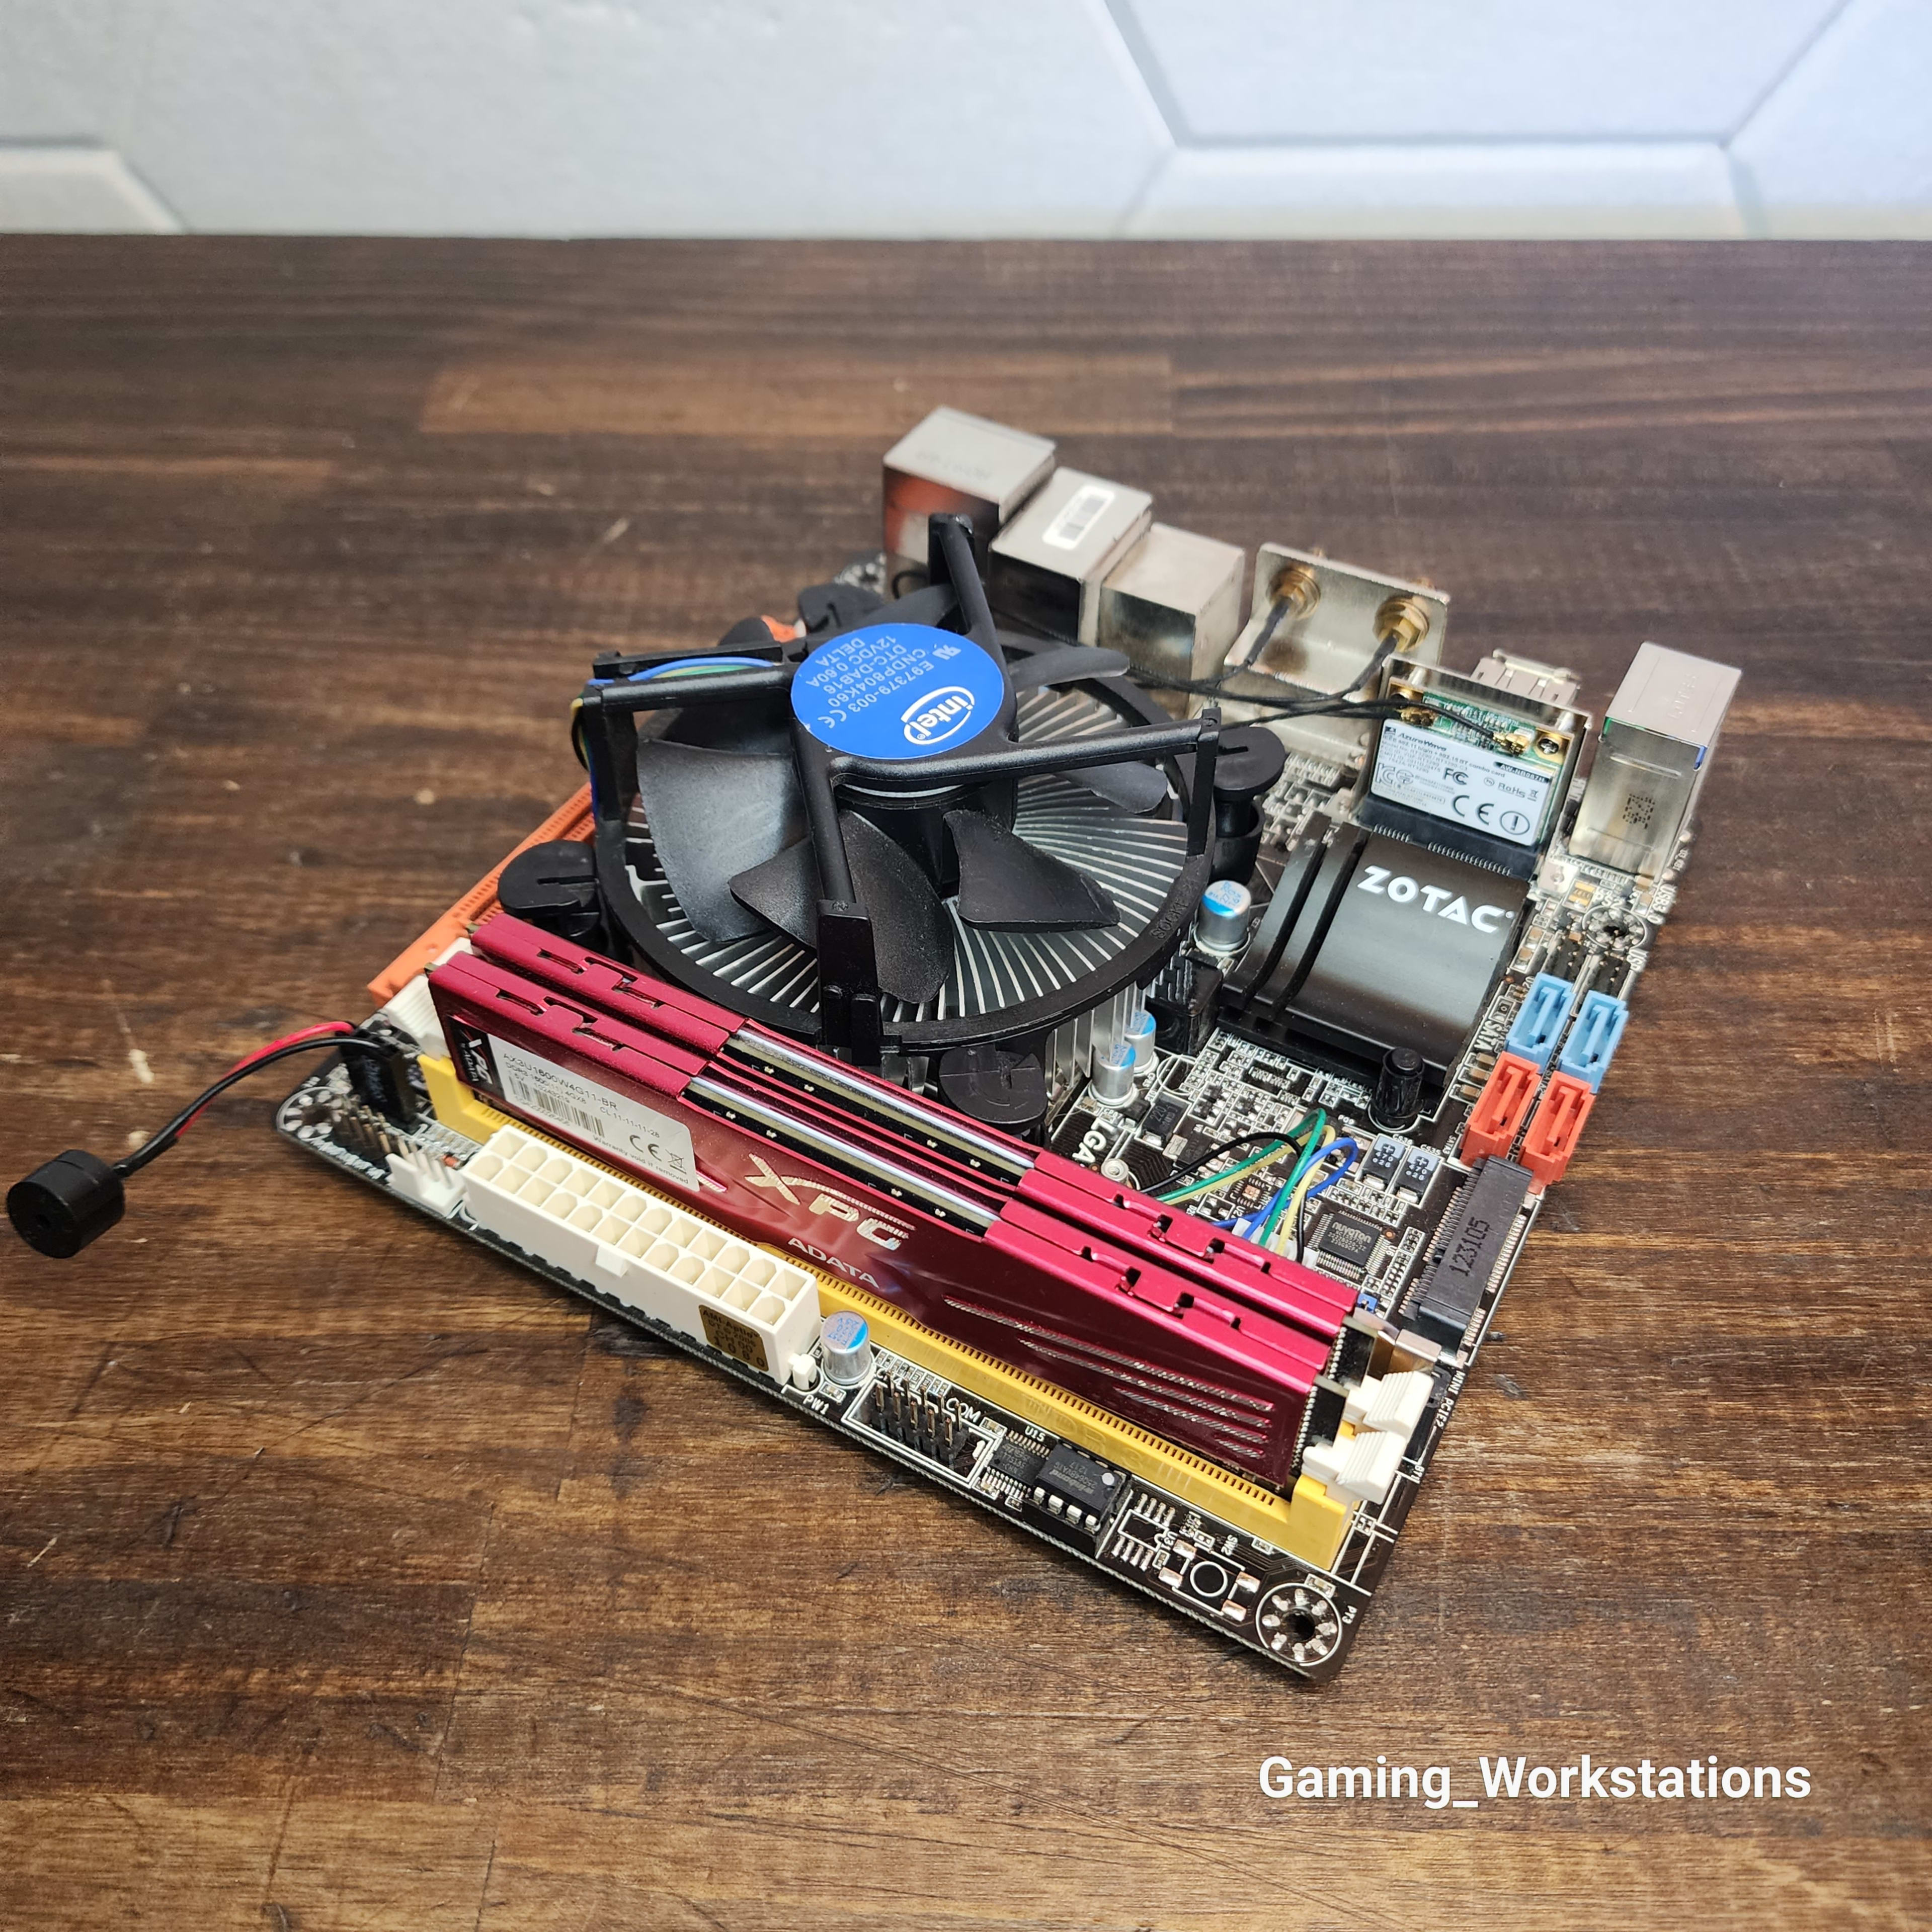 CPU + Motherboard + RAM + Cooler Combo